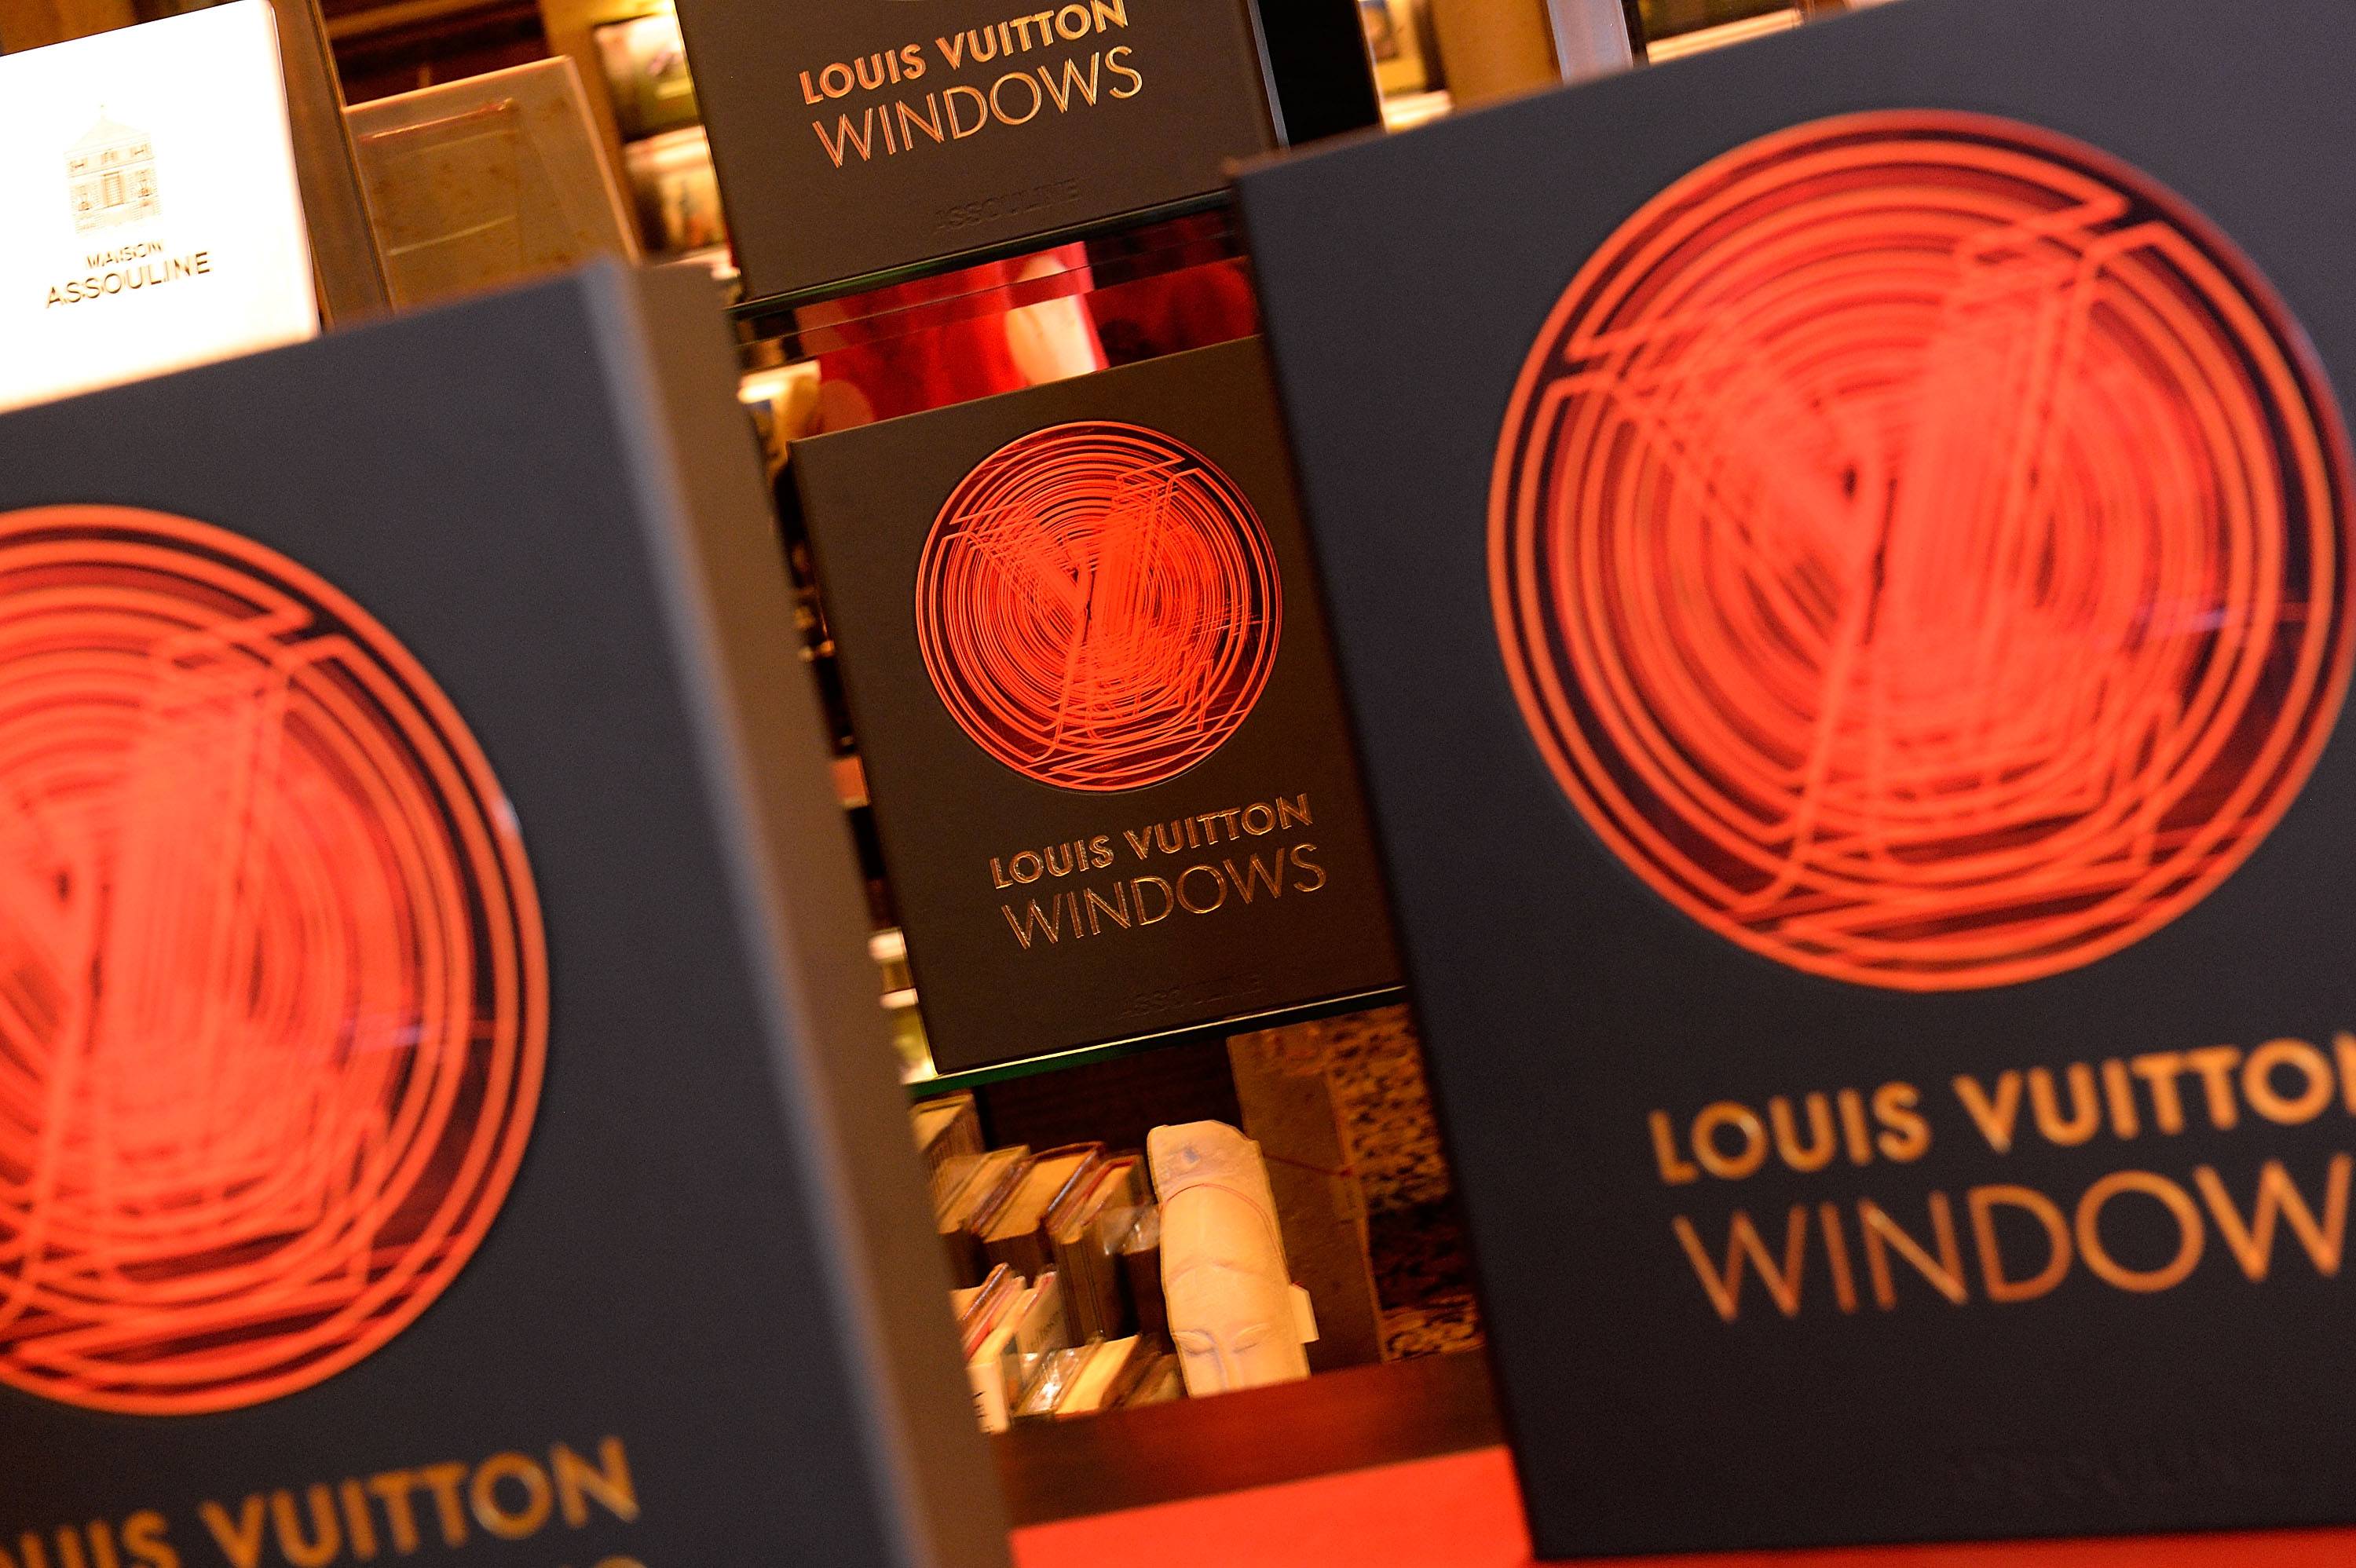 Assouline Louis Vuitton Windows Book - Shop - bhibu